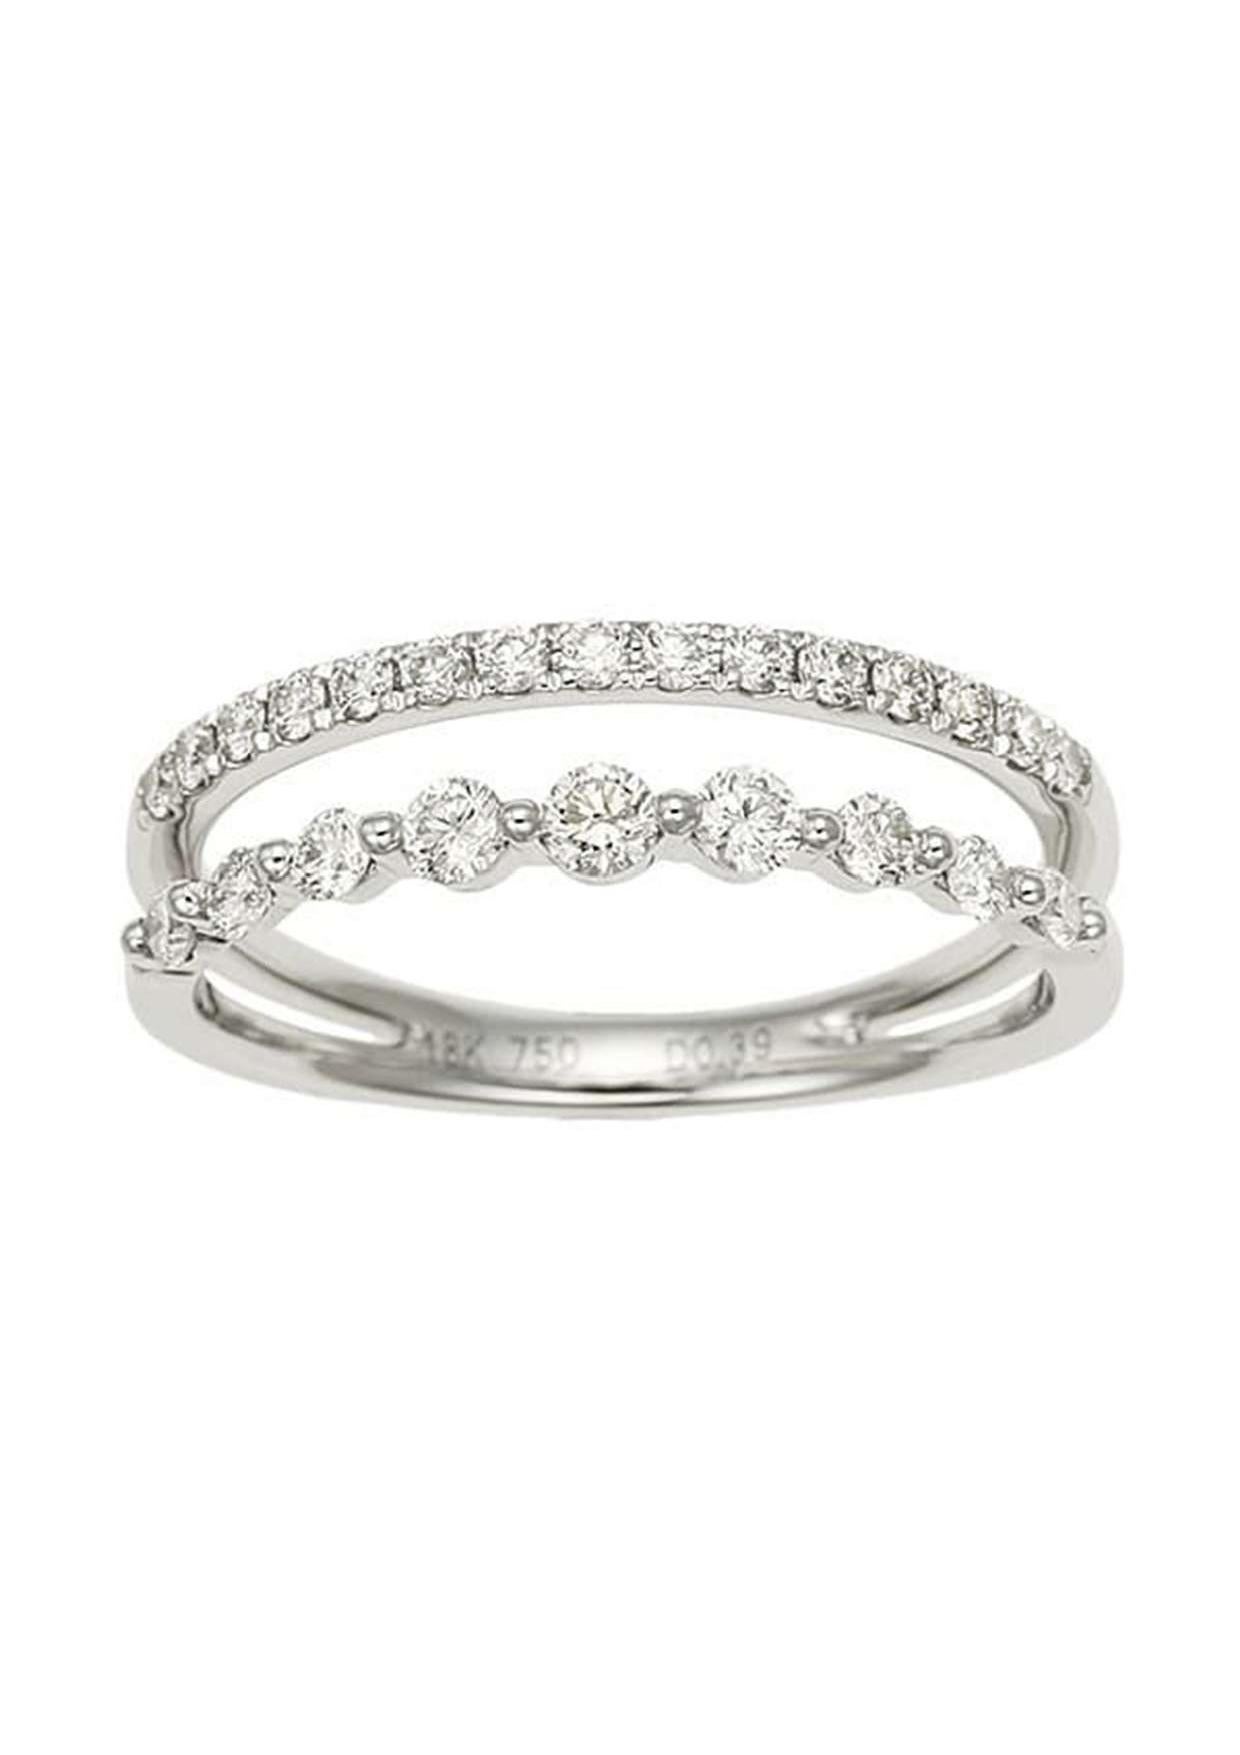 Artist 18K White Gold Diamond Ring - 0.39ct, Size 5.0 For Sale